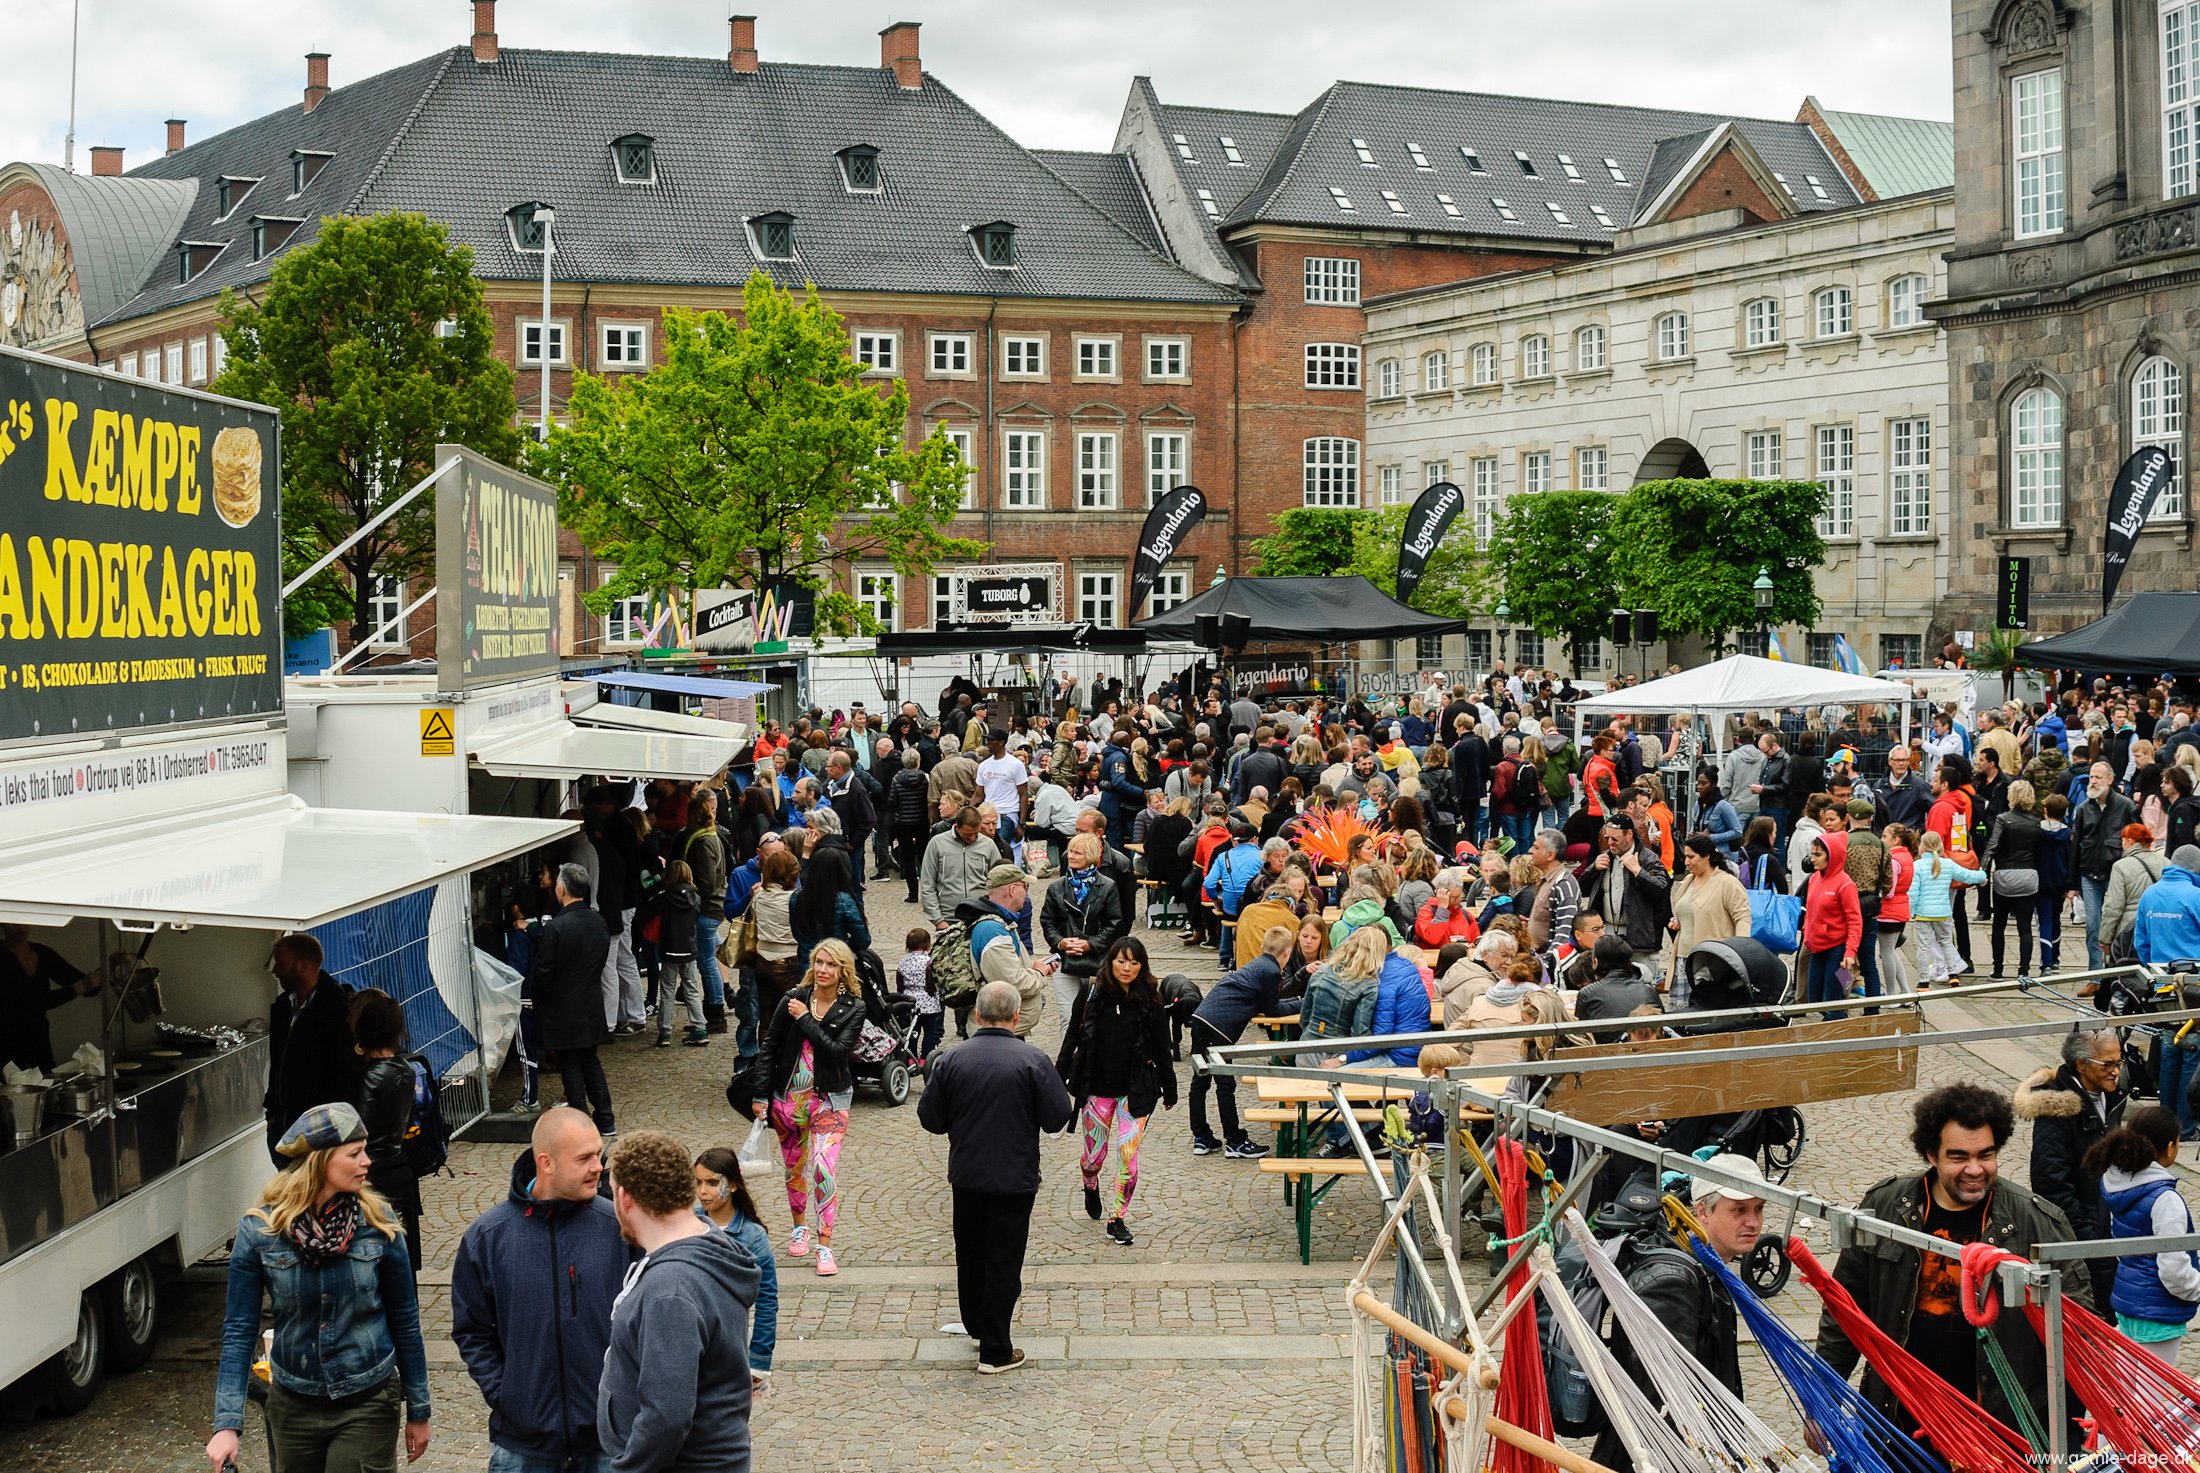 Karneval ved Christiansborg slotsplads